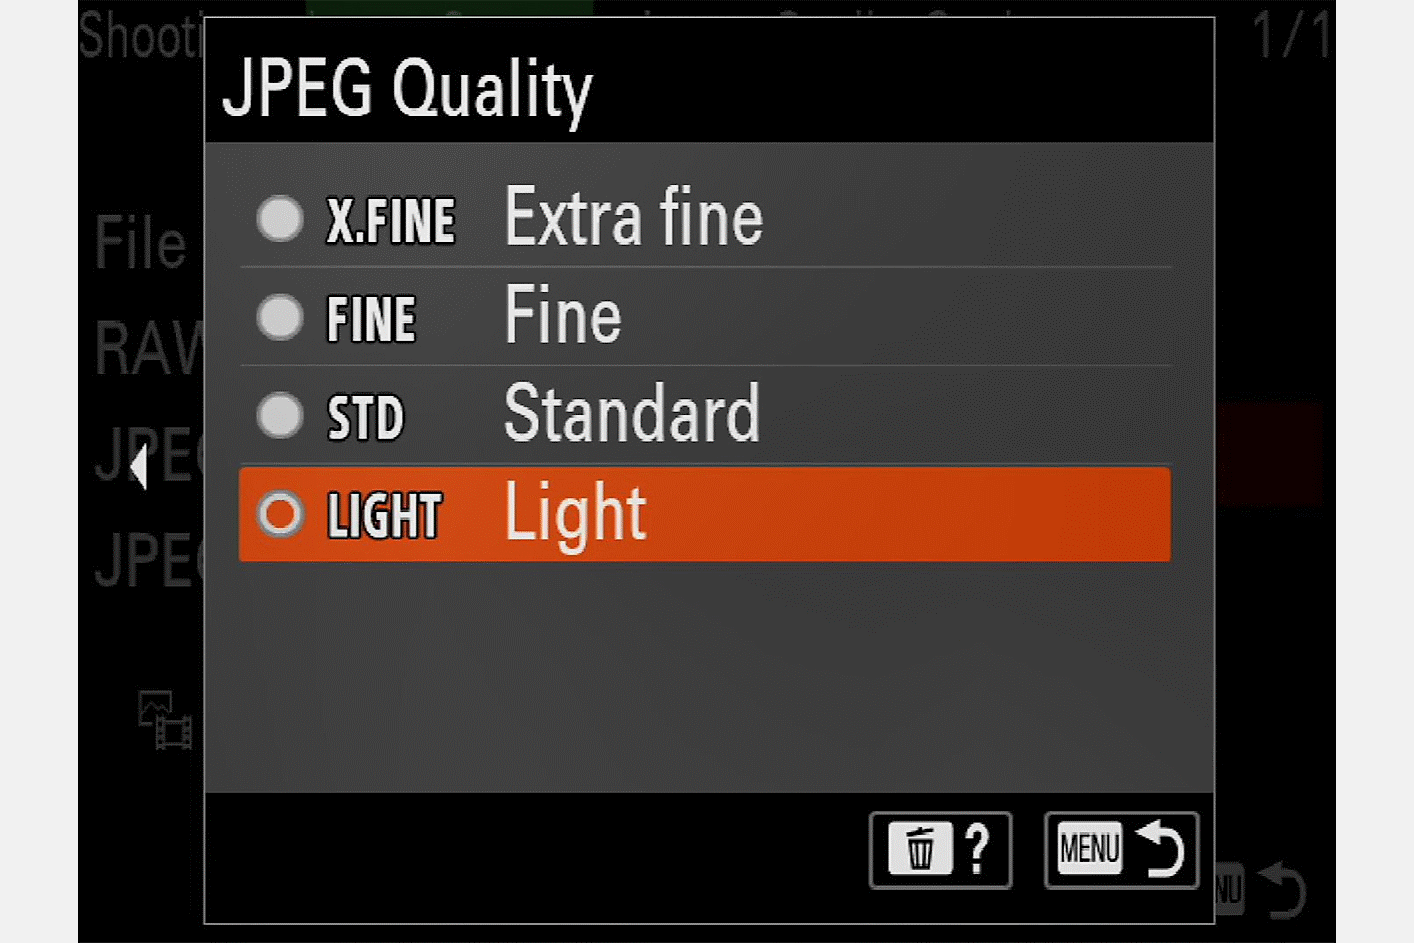 Menú "JPEG Quality" (calidad JPEG) de la cámara con el cursor en "Light" (ligero)